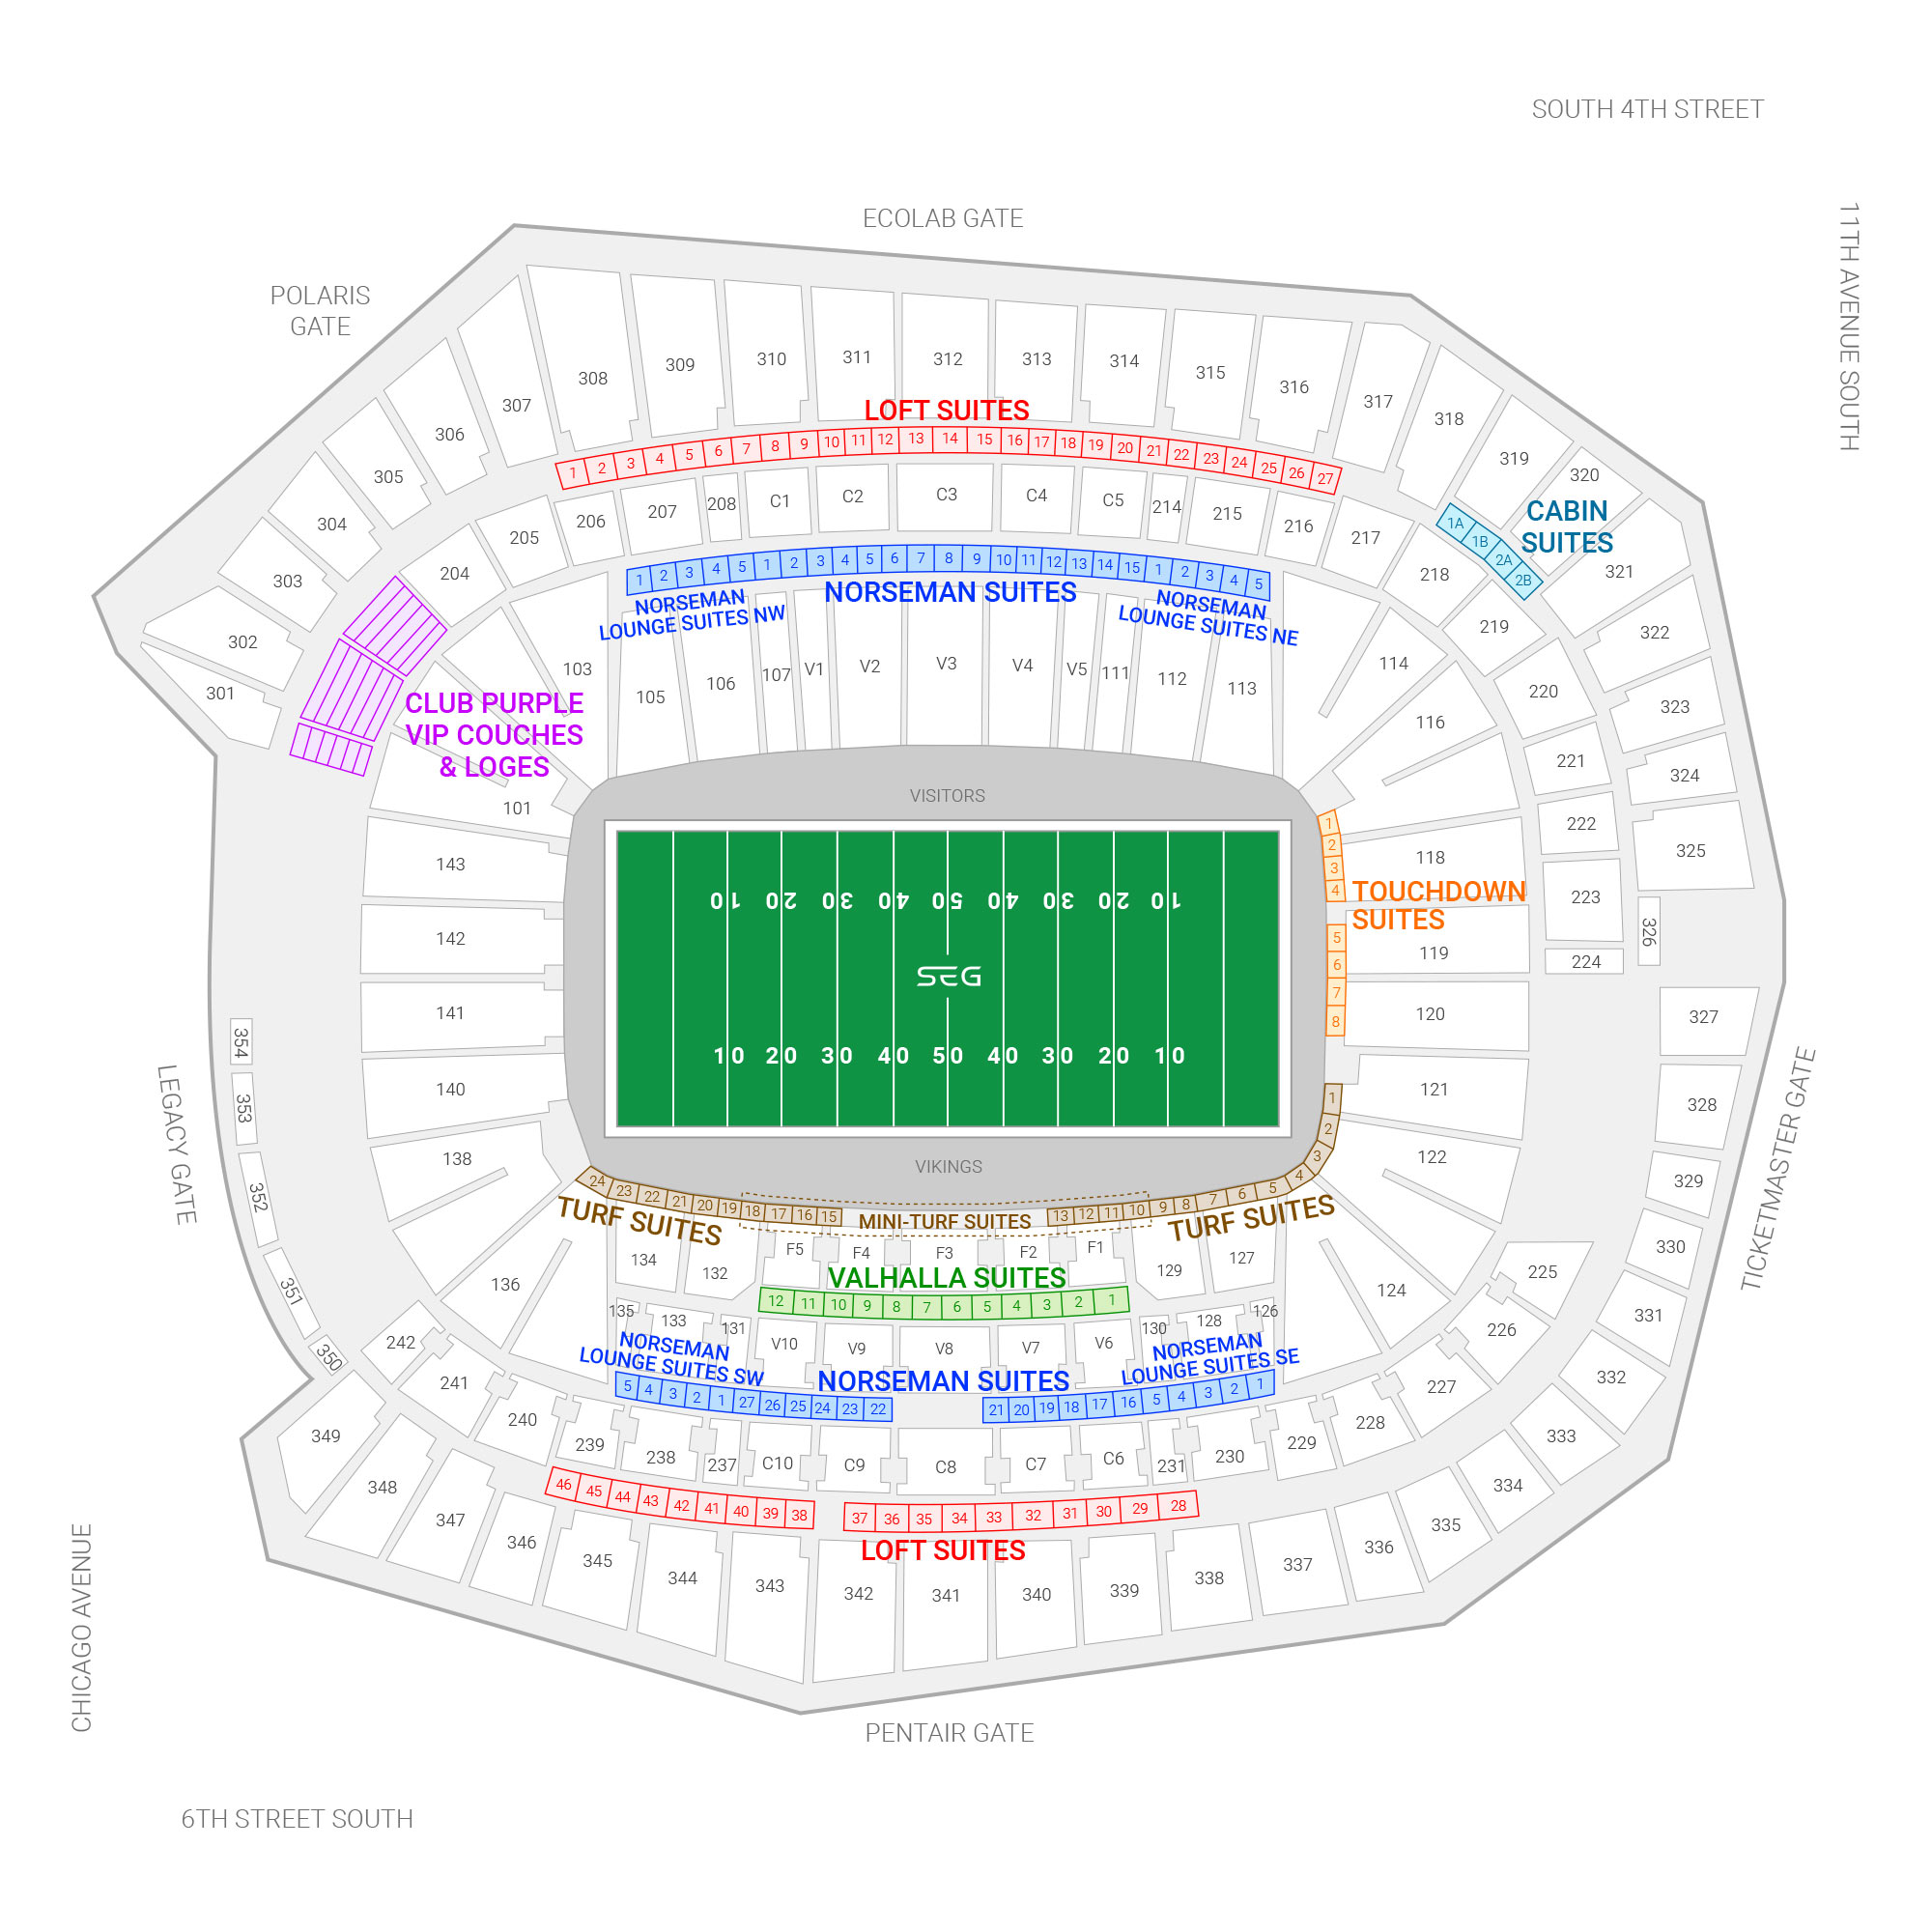 U.S. Bank Stadium / Minnesota Vikings Suite Map and Seating Chart